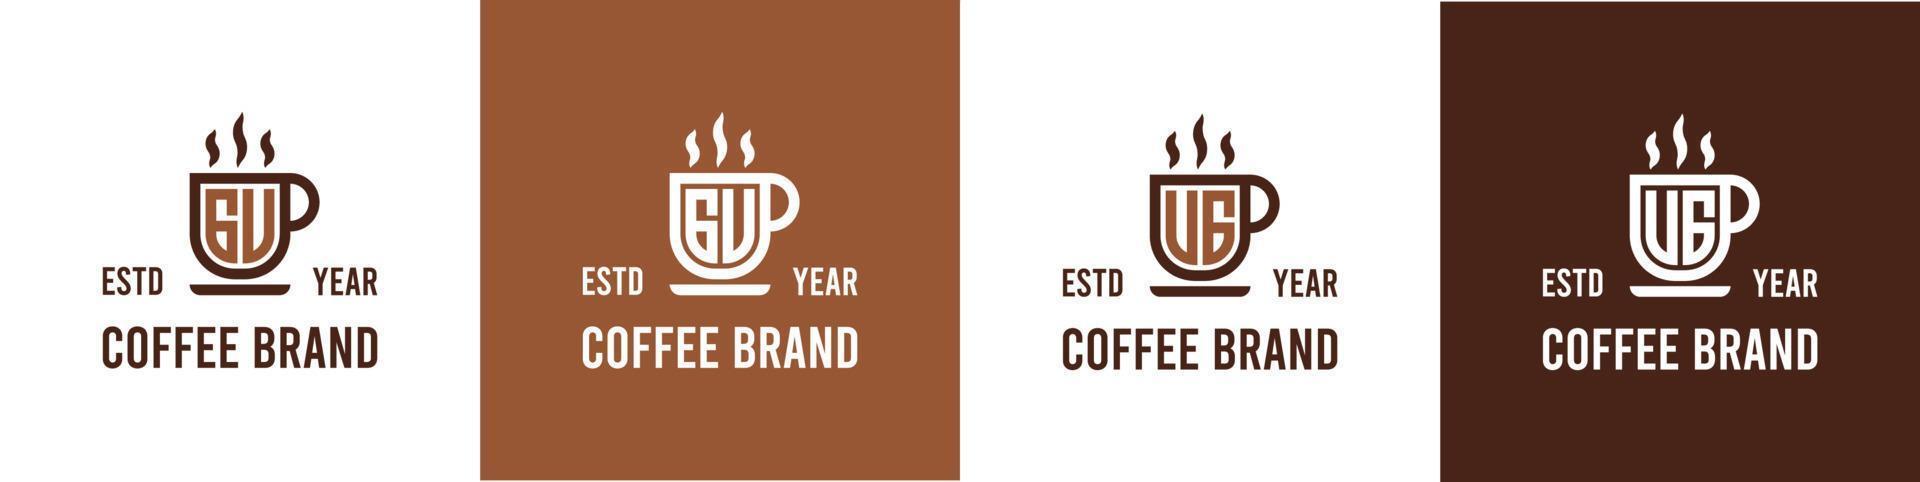 letra Gu y ug café logo, adecuado para ninguna negocio relacionado a café, té, o otro con Gu o ug iniciales. vector